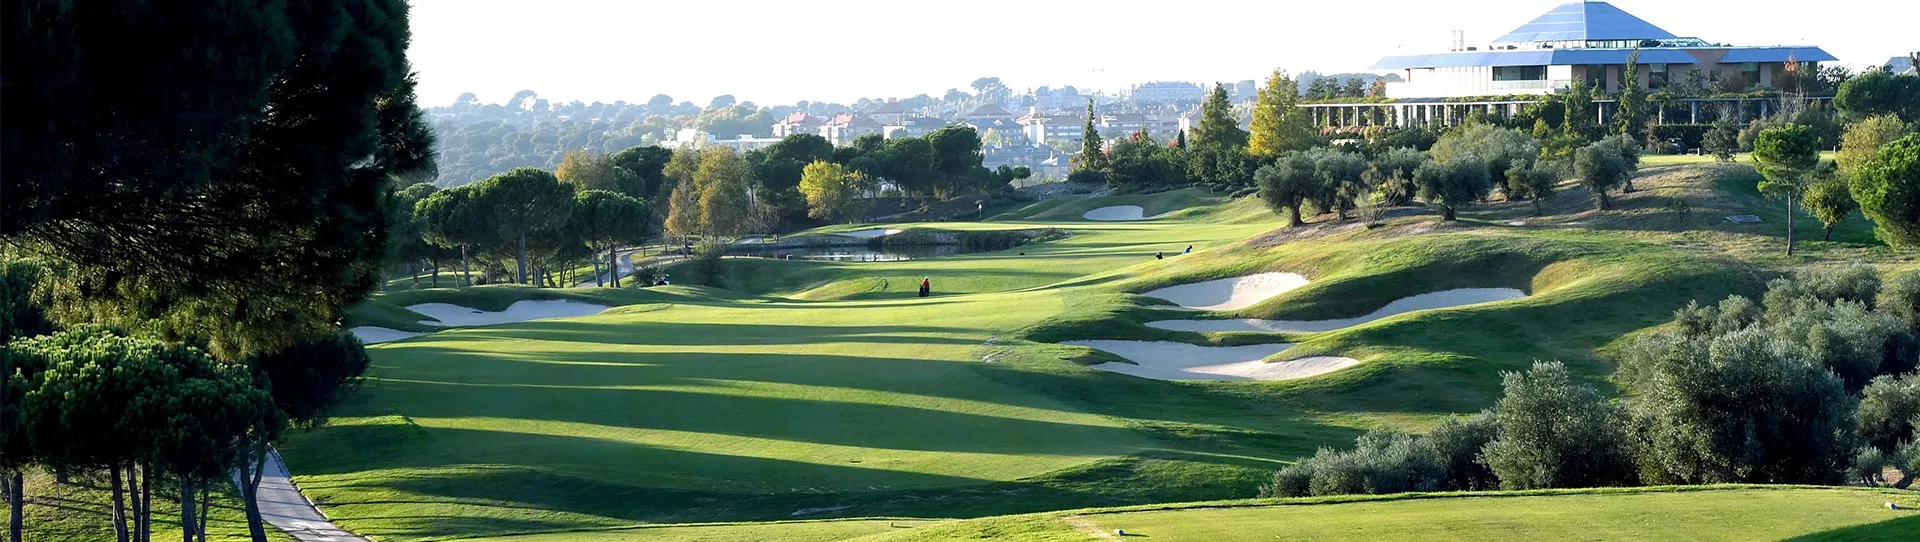 Spain golf courses - Santander Golf Course - Photo 1